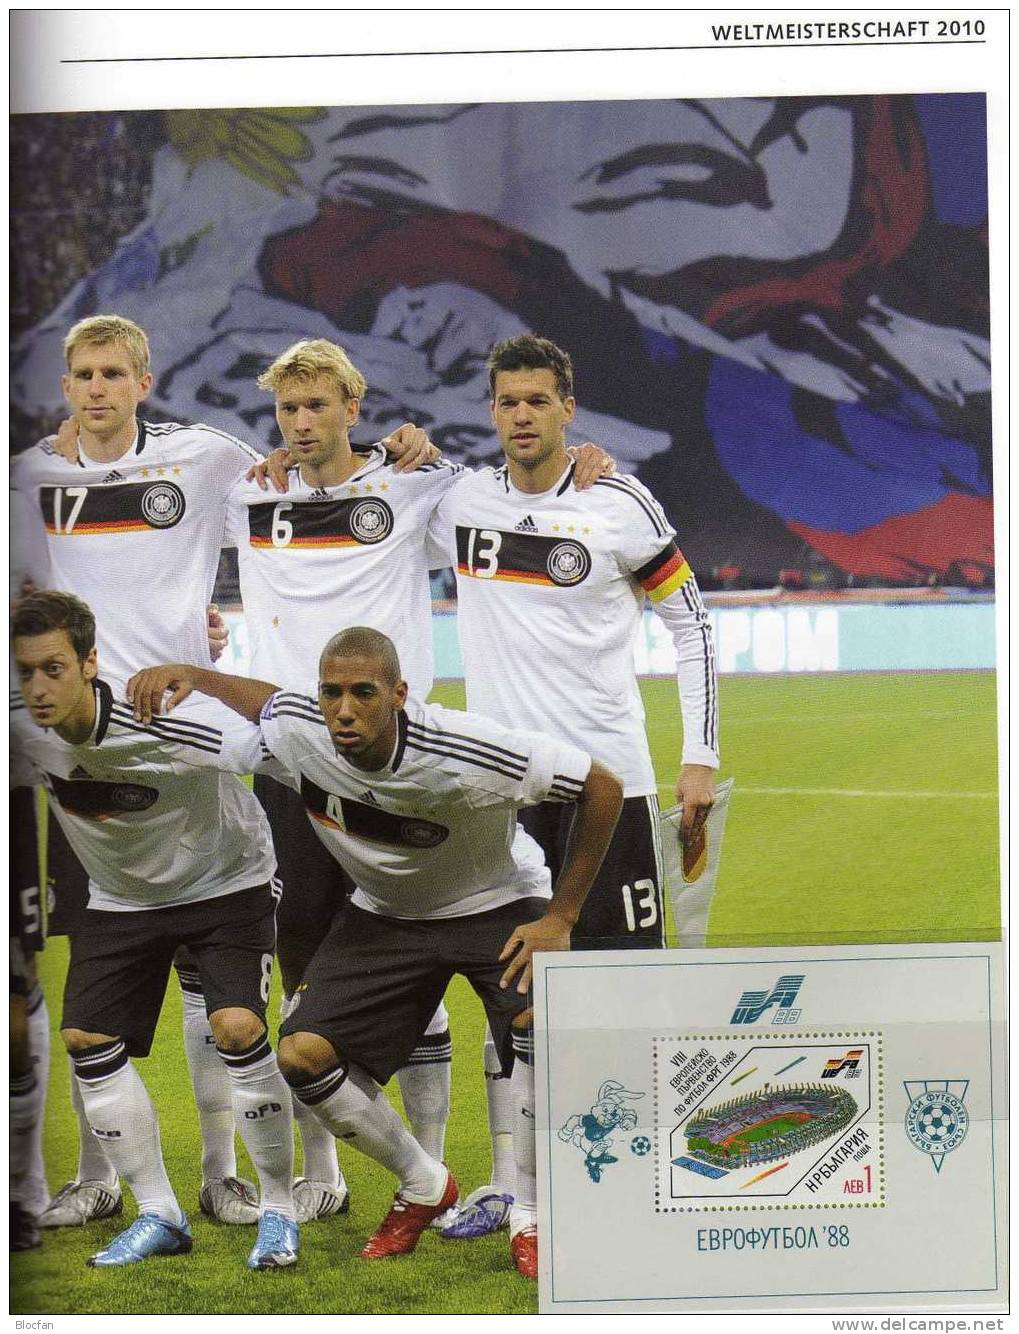 Fussball WM Südafrika mit 12 Ausgaben ** oder o 156€ Stadien FIFA Pokal documentation Germany bloc soccer sheet of world